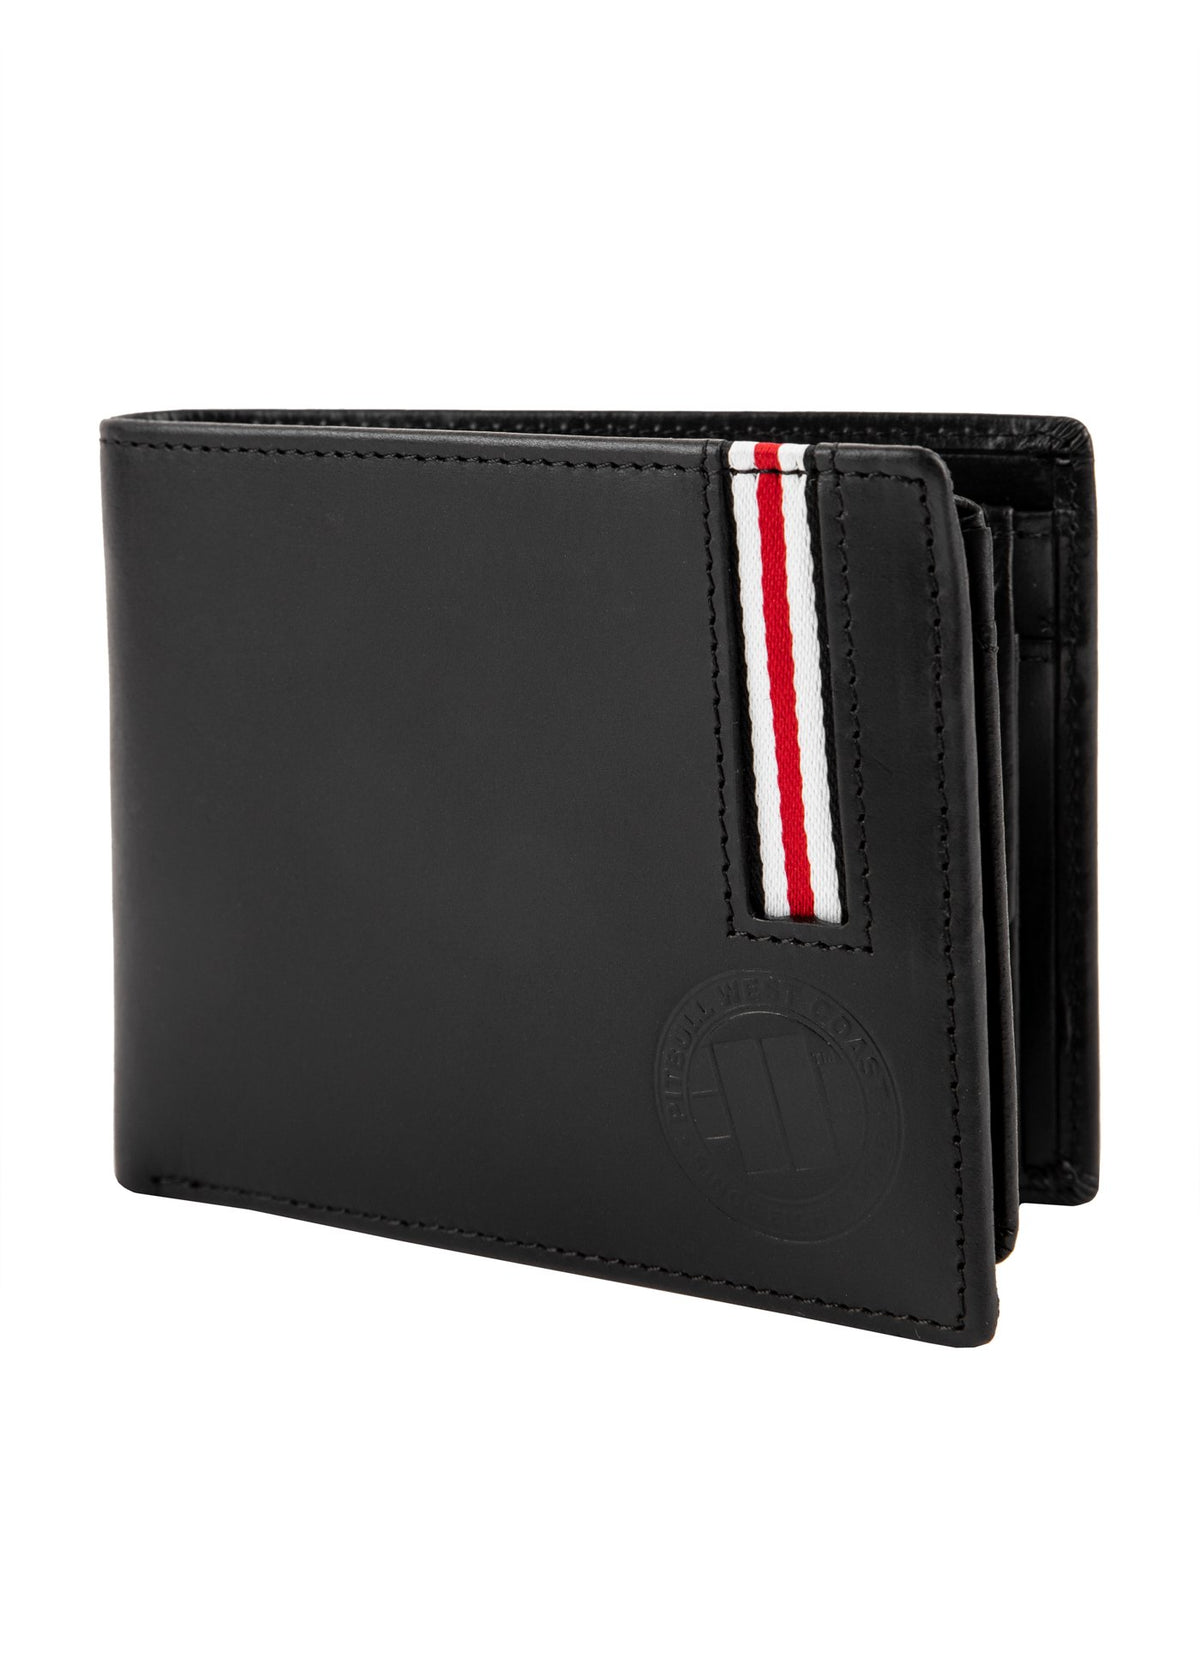 LIN WOOD Black Leather Wallet.